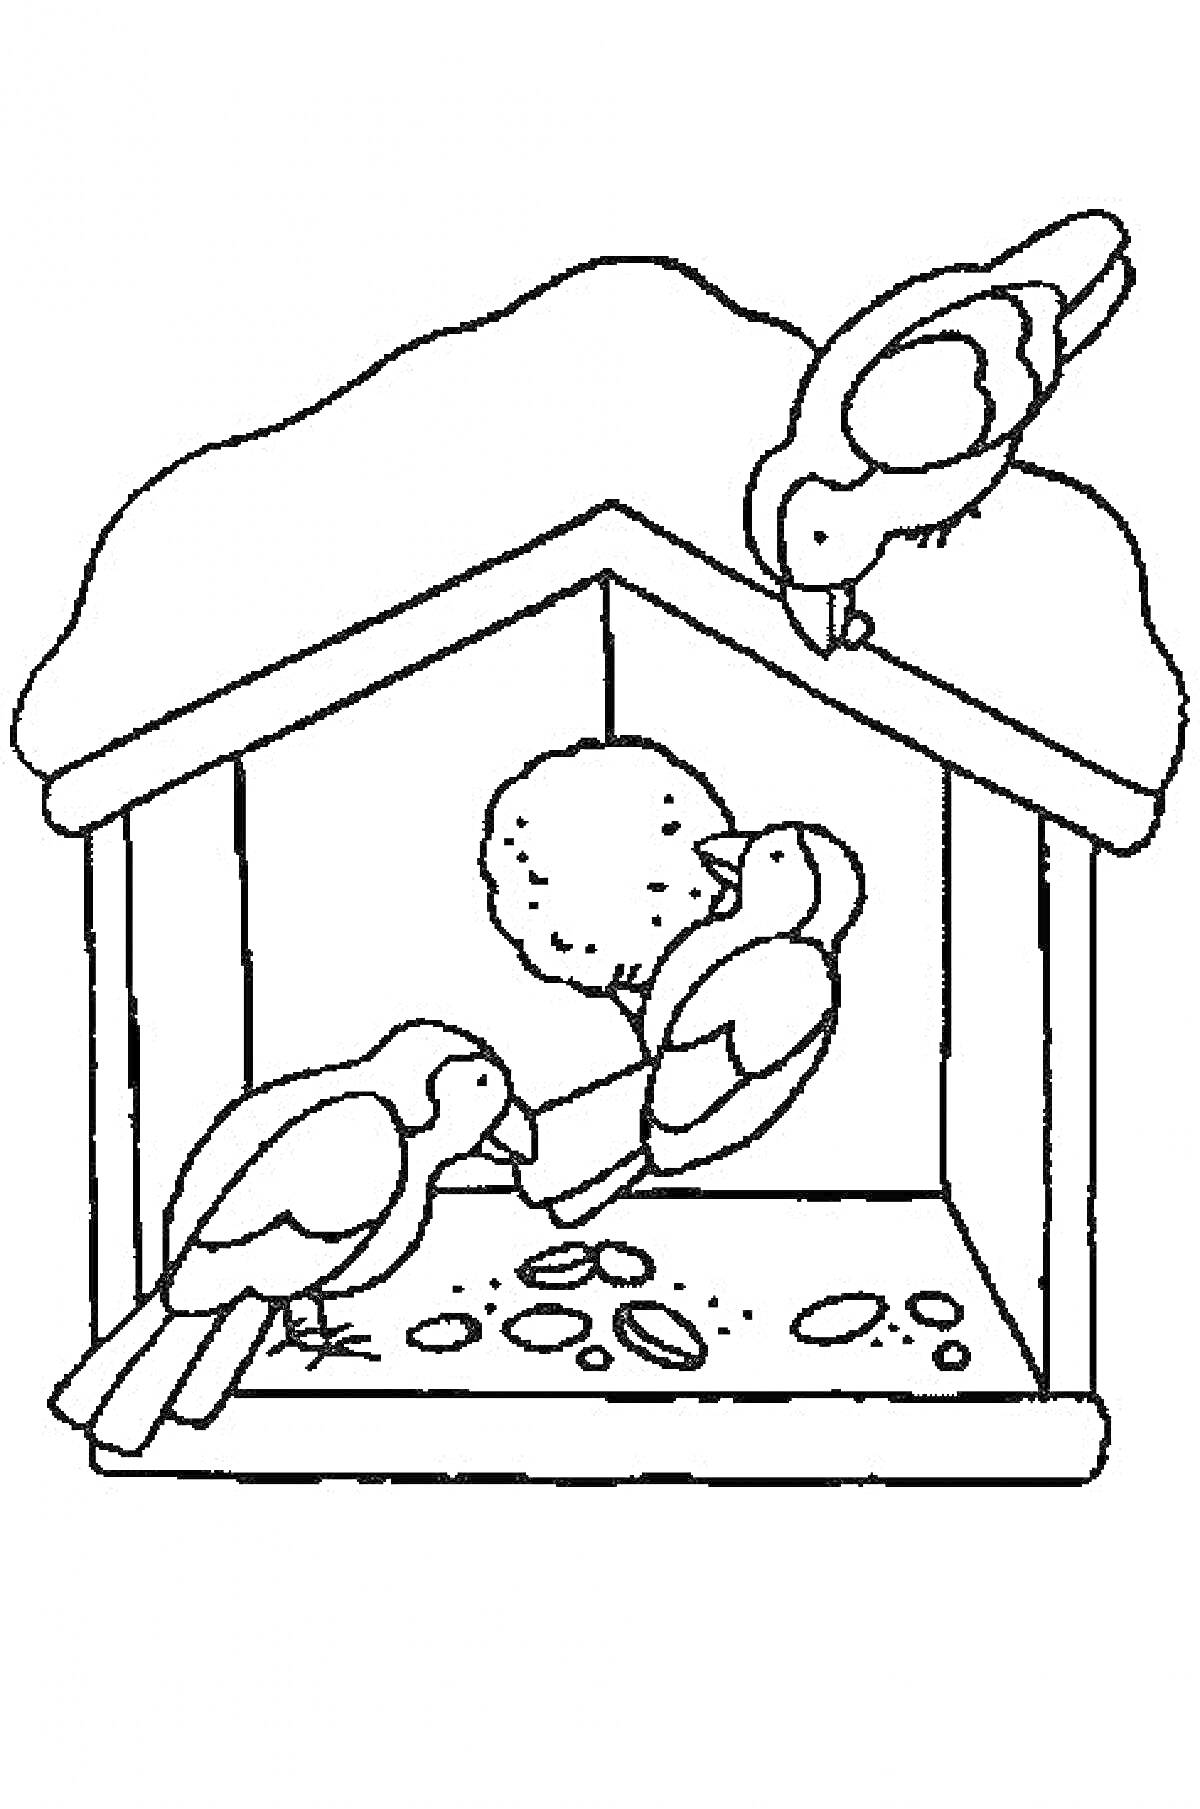 Раскраска Кормушка с тремя птицами и кормом внутри